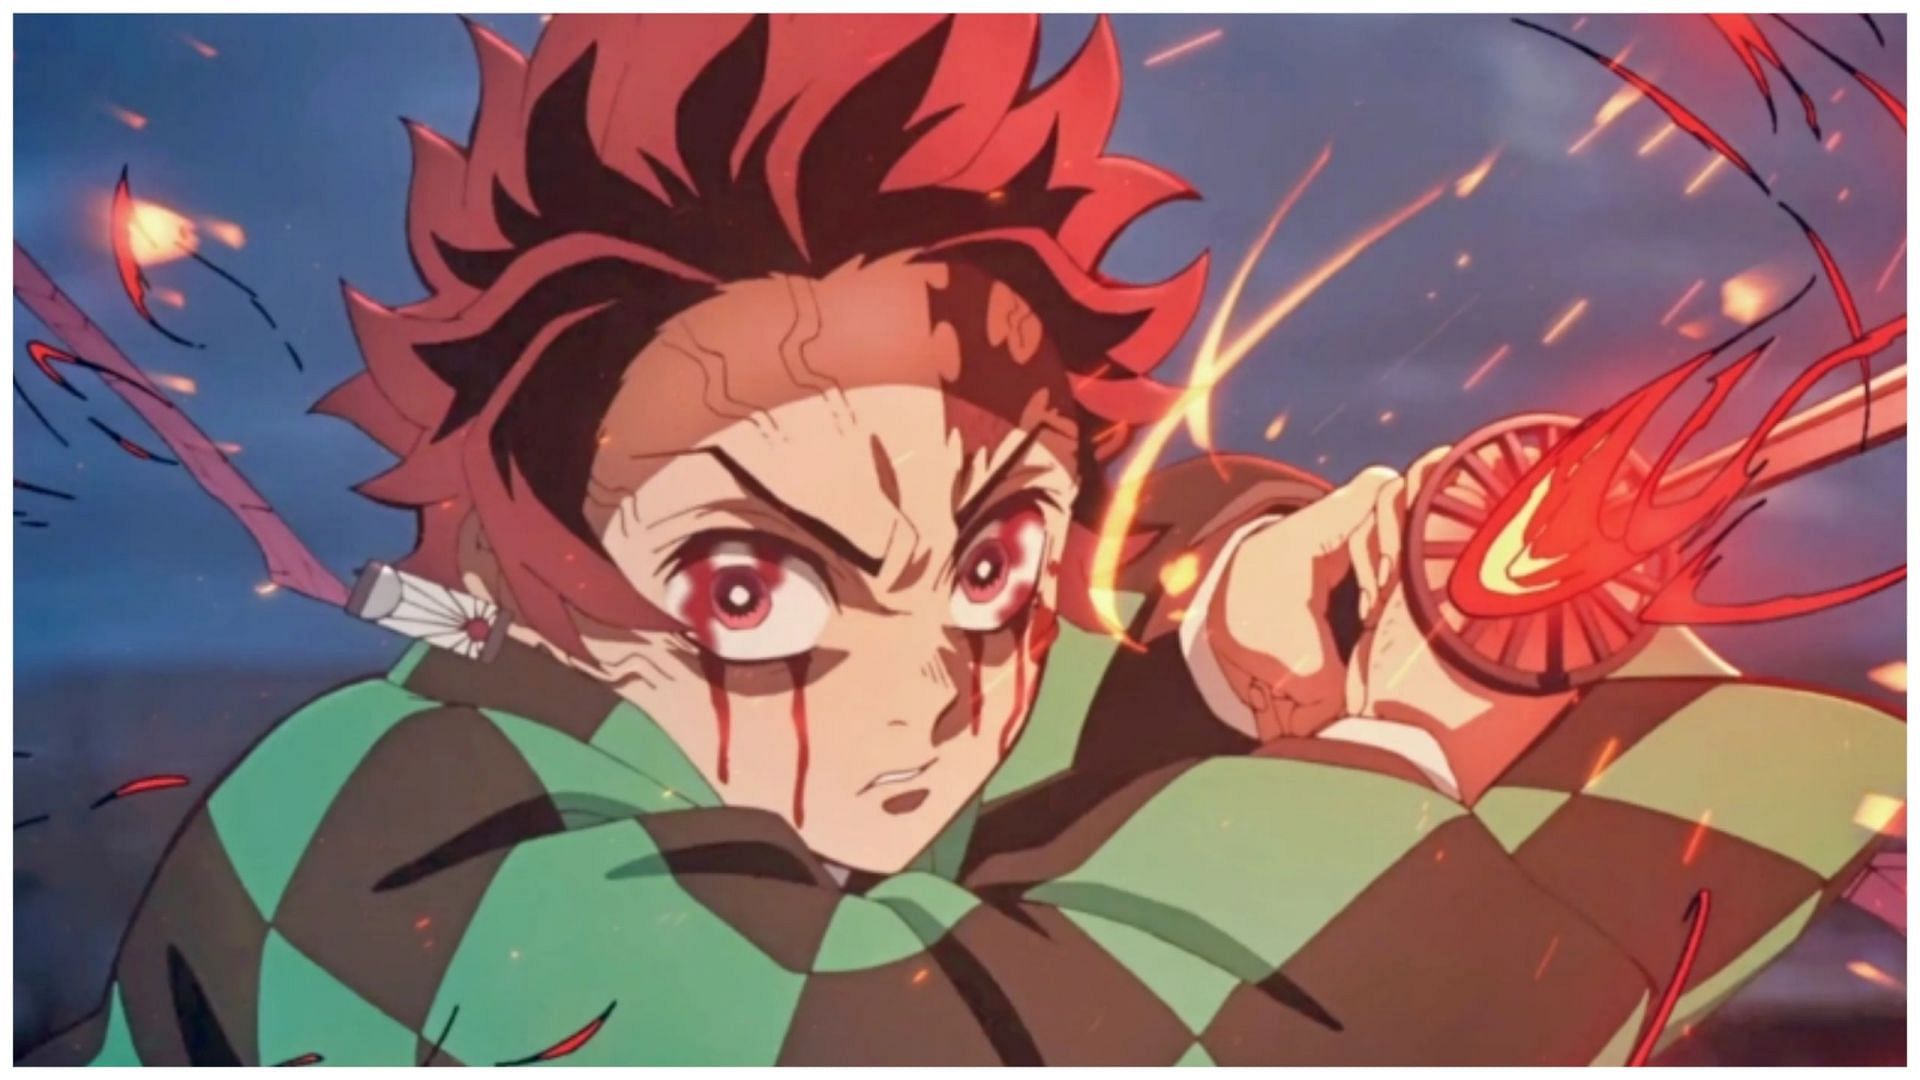 Revolutionary anime character - Tanjiro Kamado (Image via Ufotable)